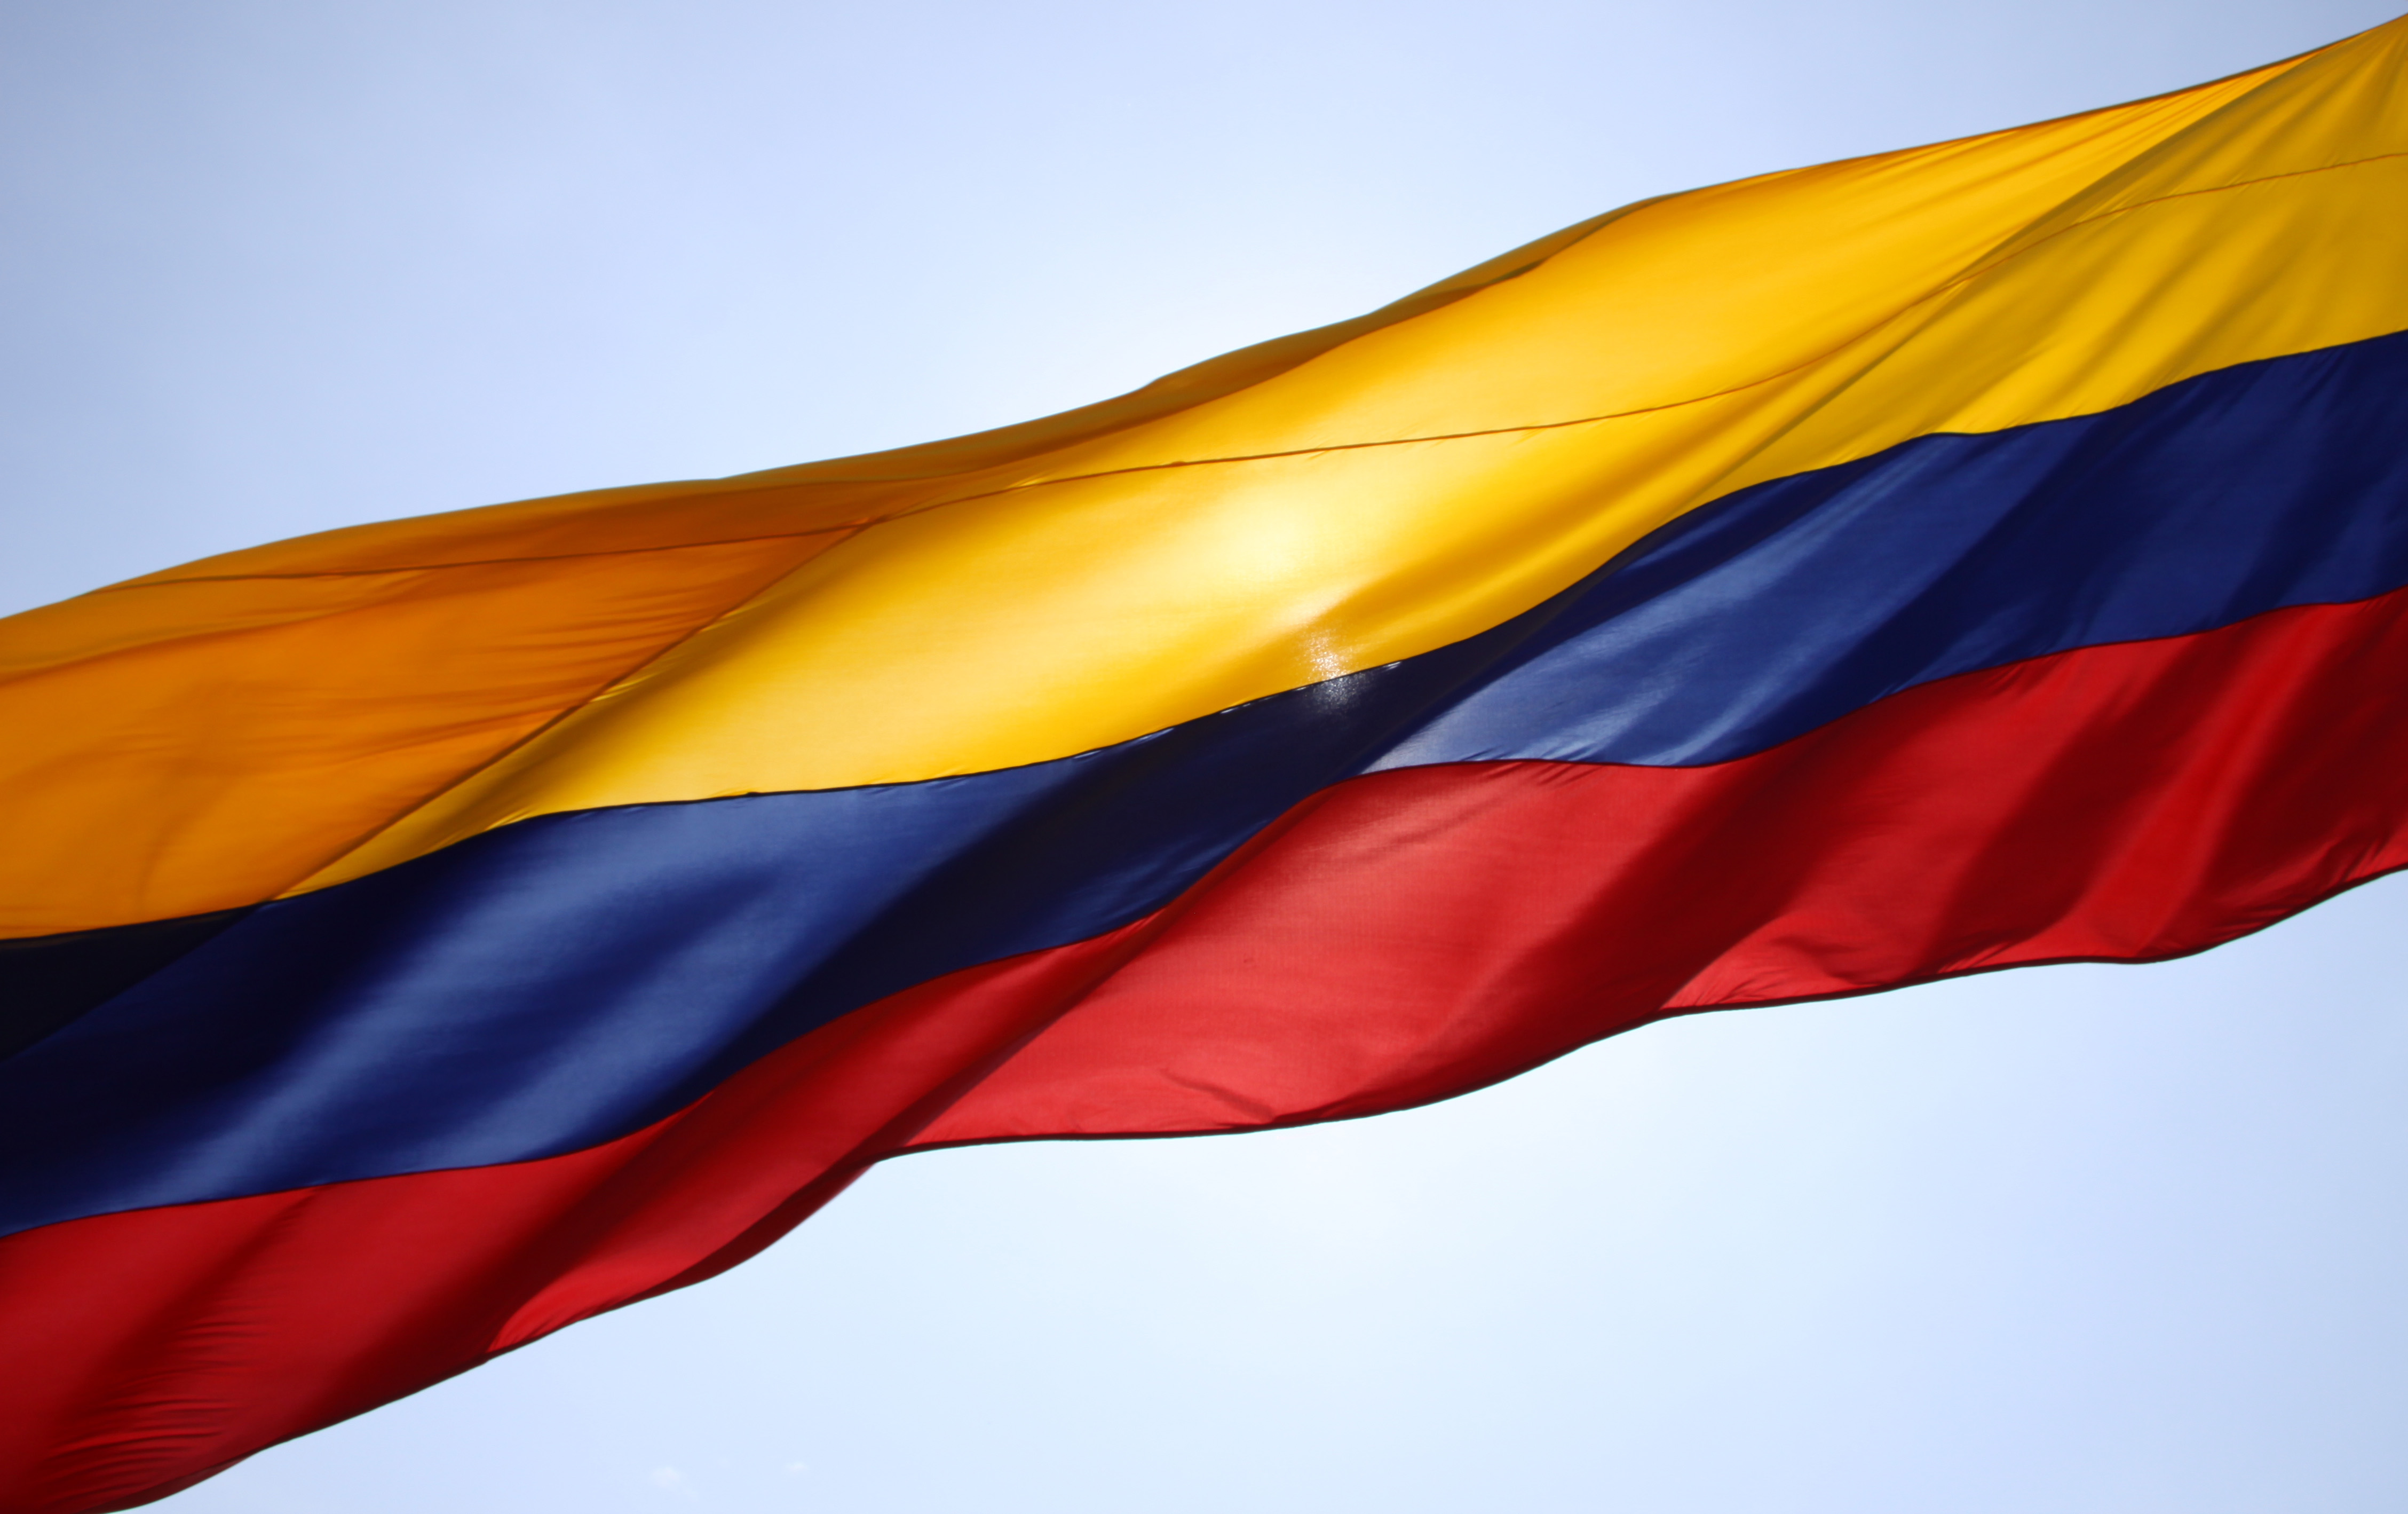 https://arquimedia.s3.amazonaws.com/63/noticias/bandera-colombiajpg.JPG